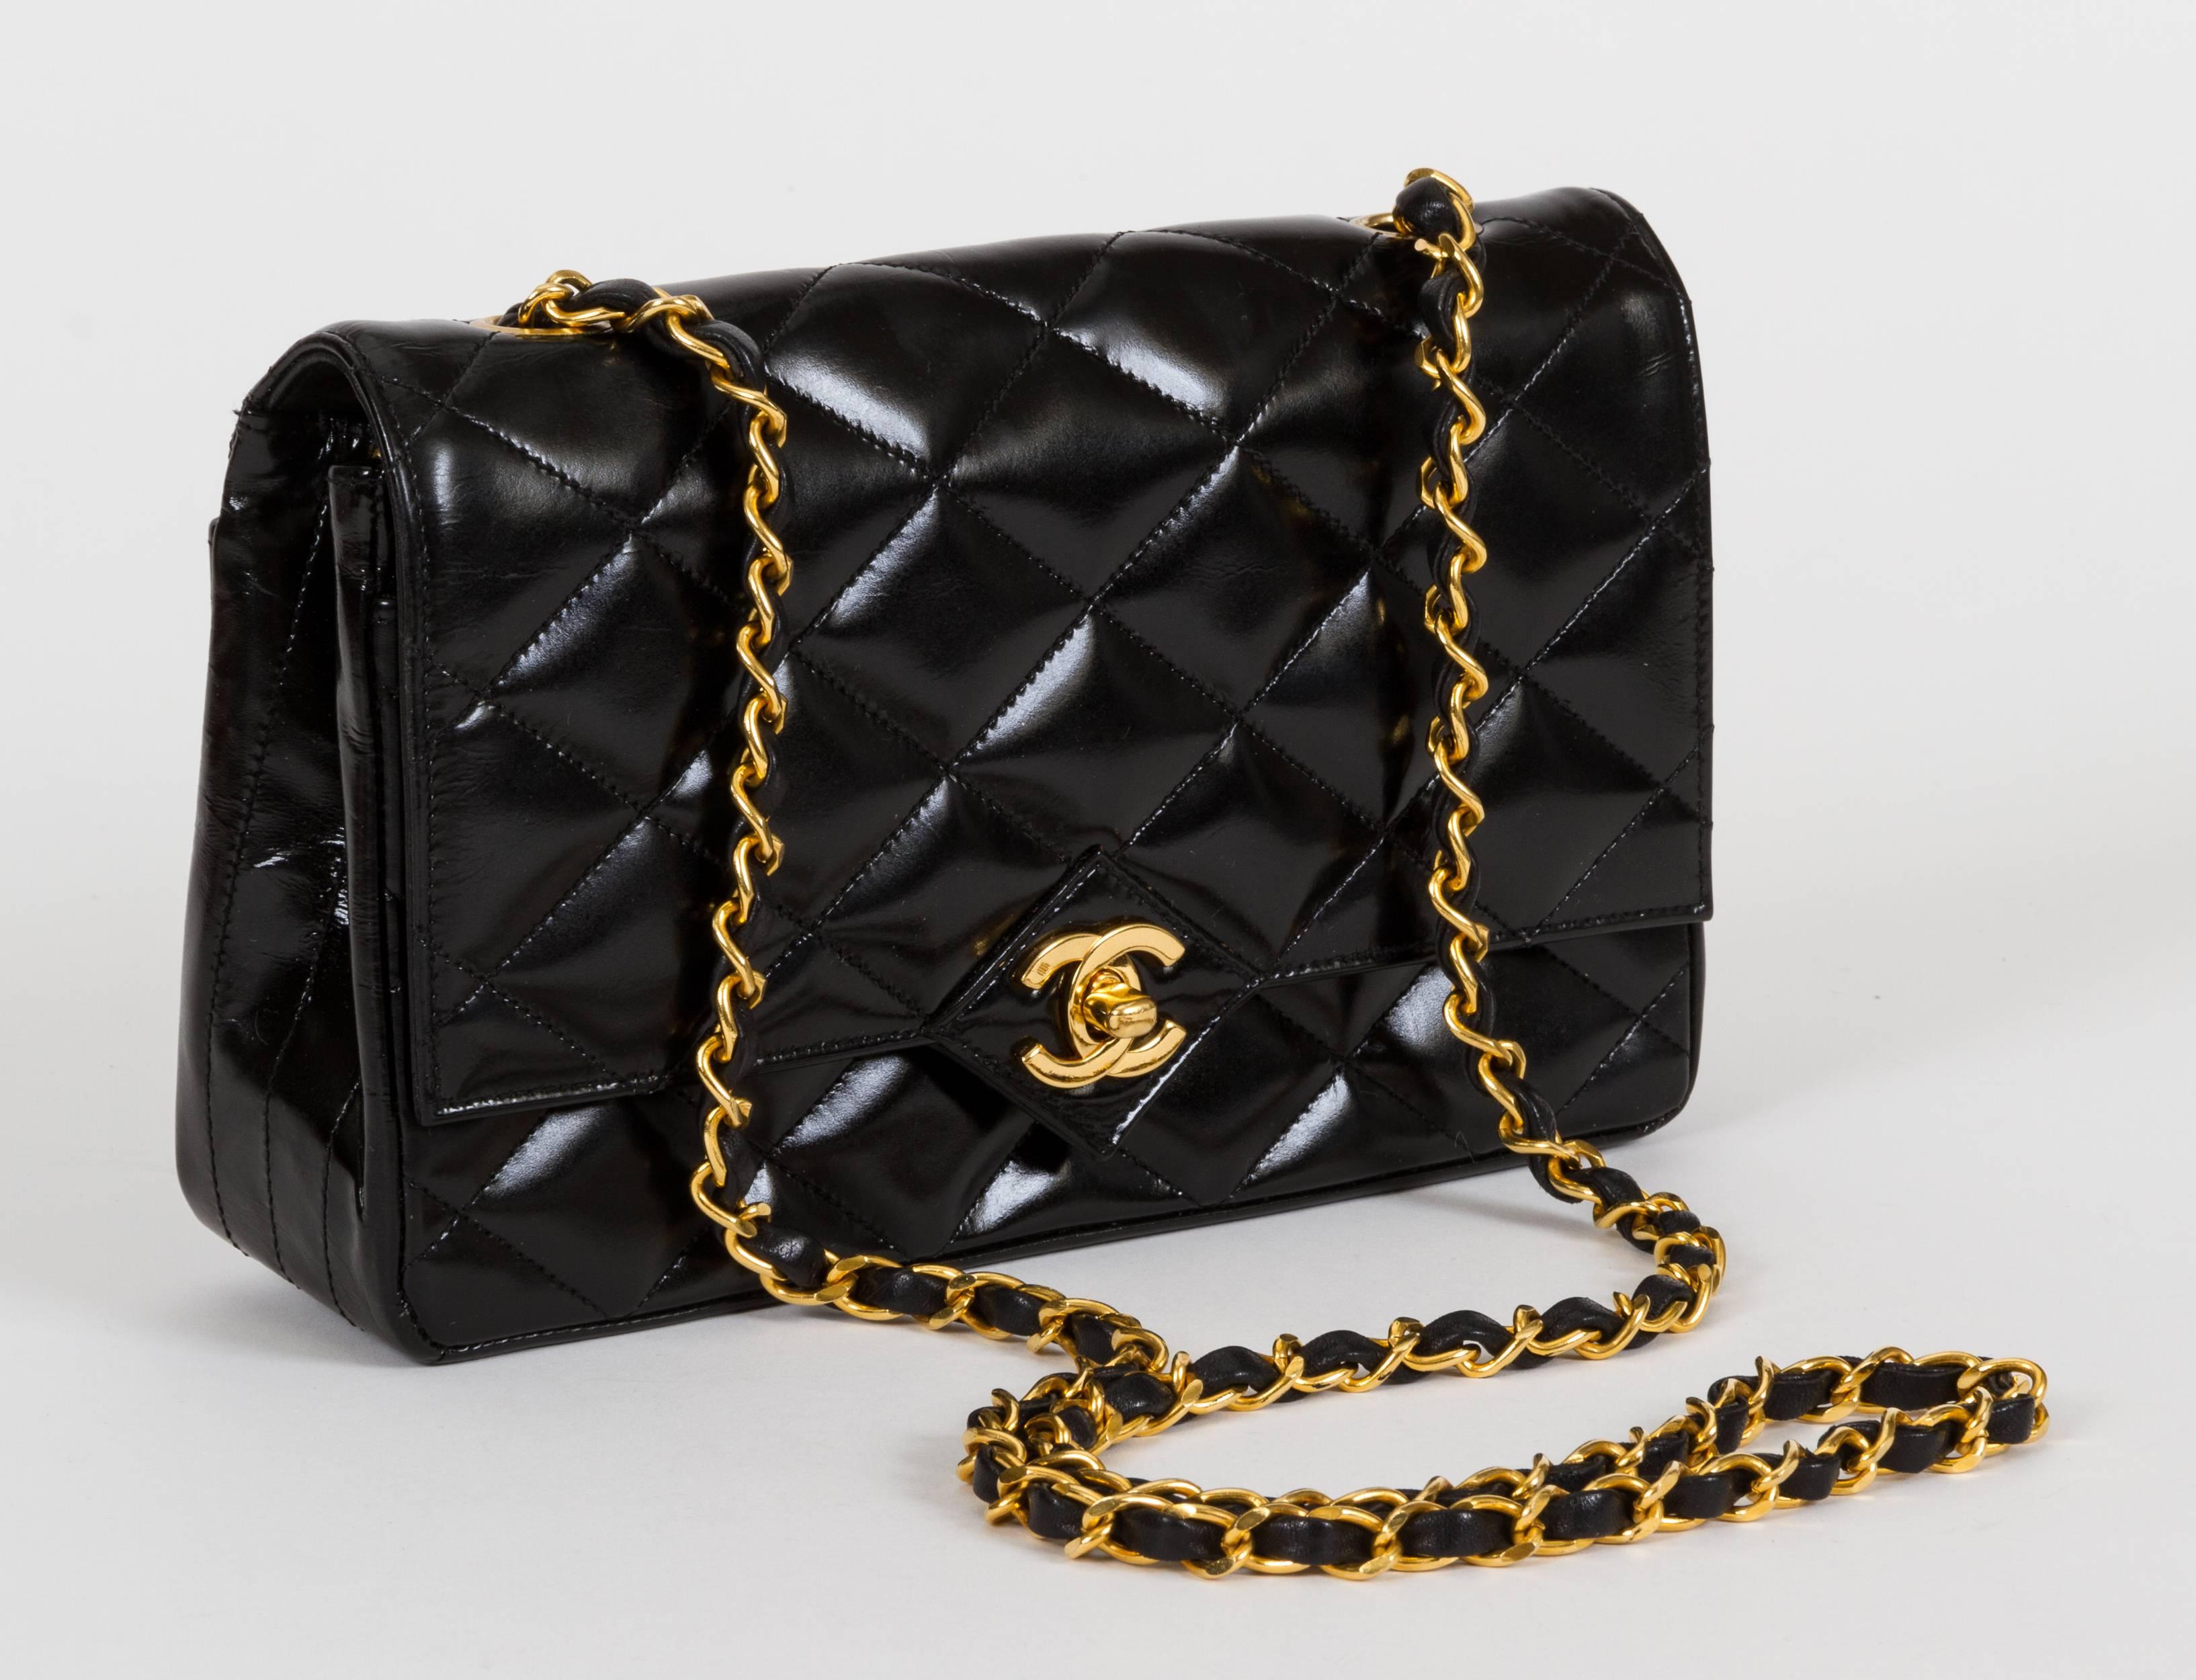 1990s Chanel black patent leather single envelope flap bag. Shoulder drop, 21